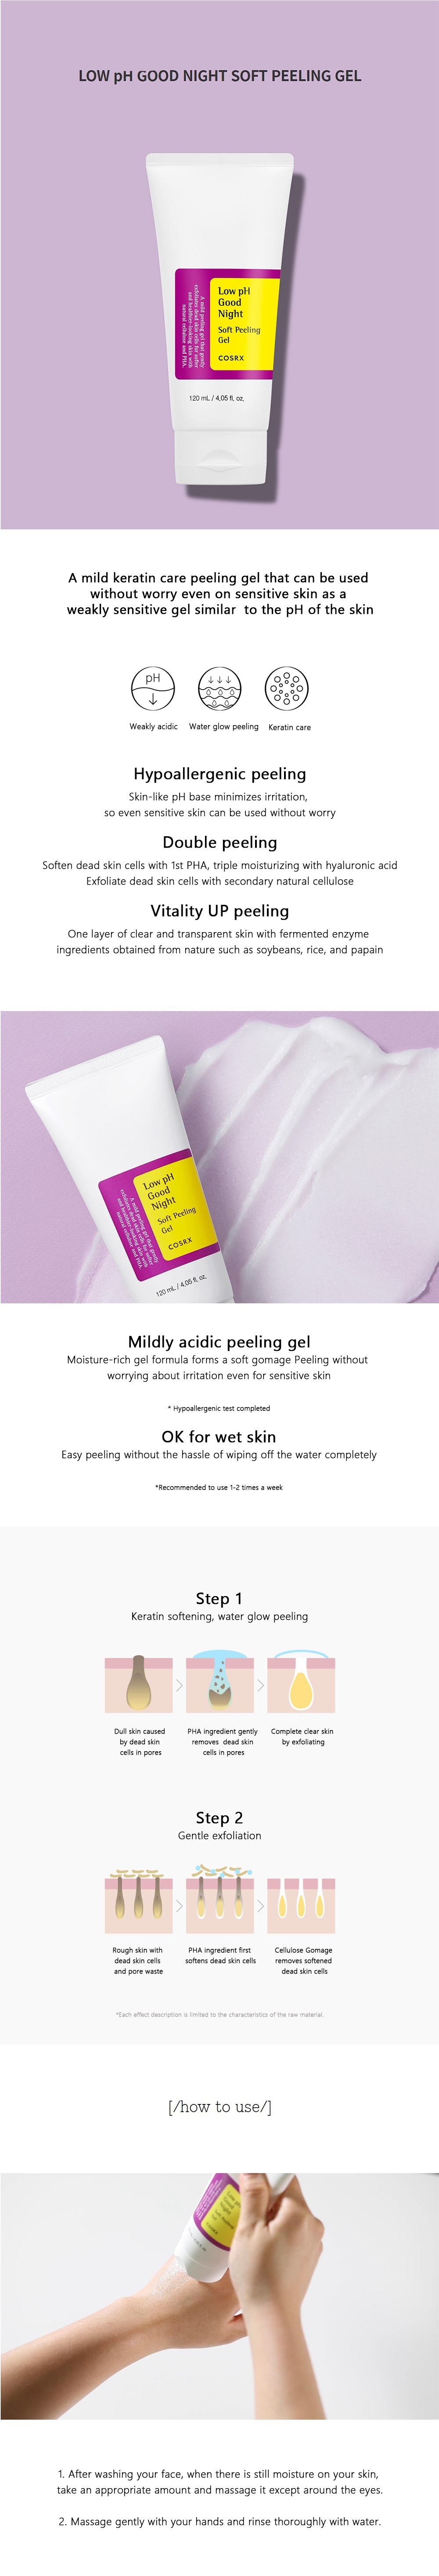 Cosrx Low pH Good Night Soft Peeling Gel korean skincare product online shop malaysia india taiwan1